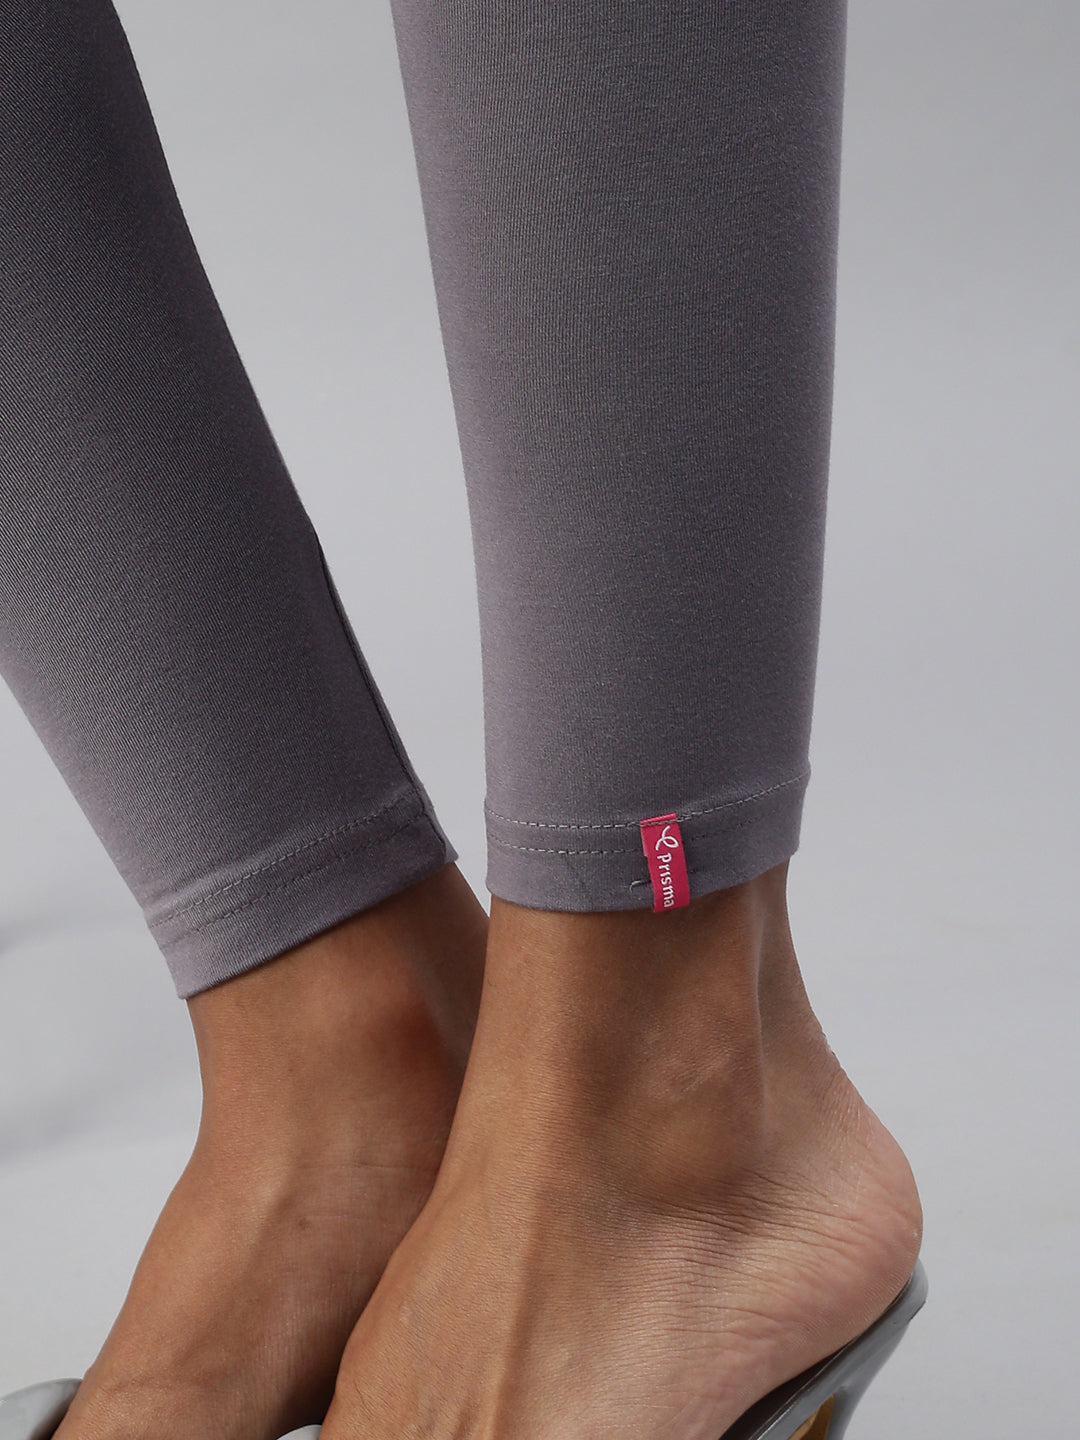 Prisma Women's Skinny Fit Ankle Leggings - Pink